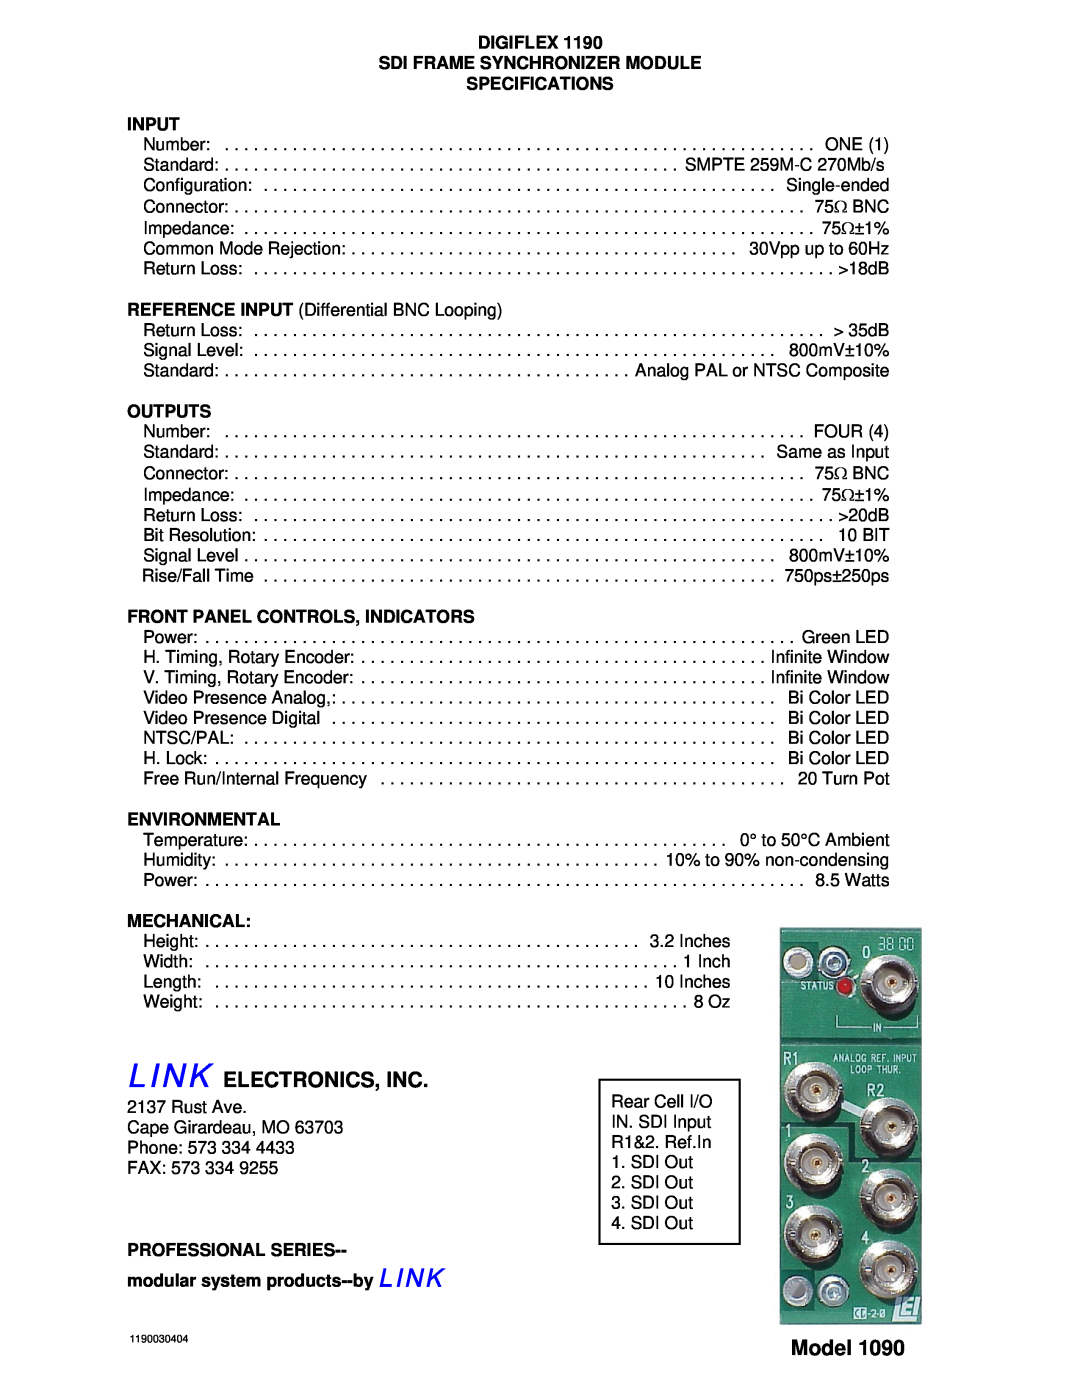 Link electronic DigiFlex 1190 Digiflex Sdi Frame Synchronizer Module Specifications Input, Outputs, Environmental, Model 